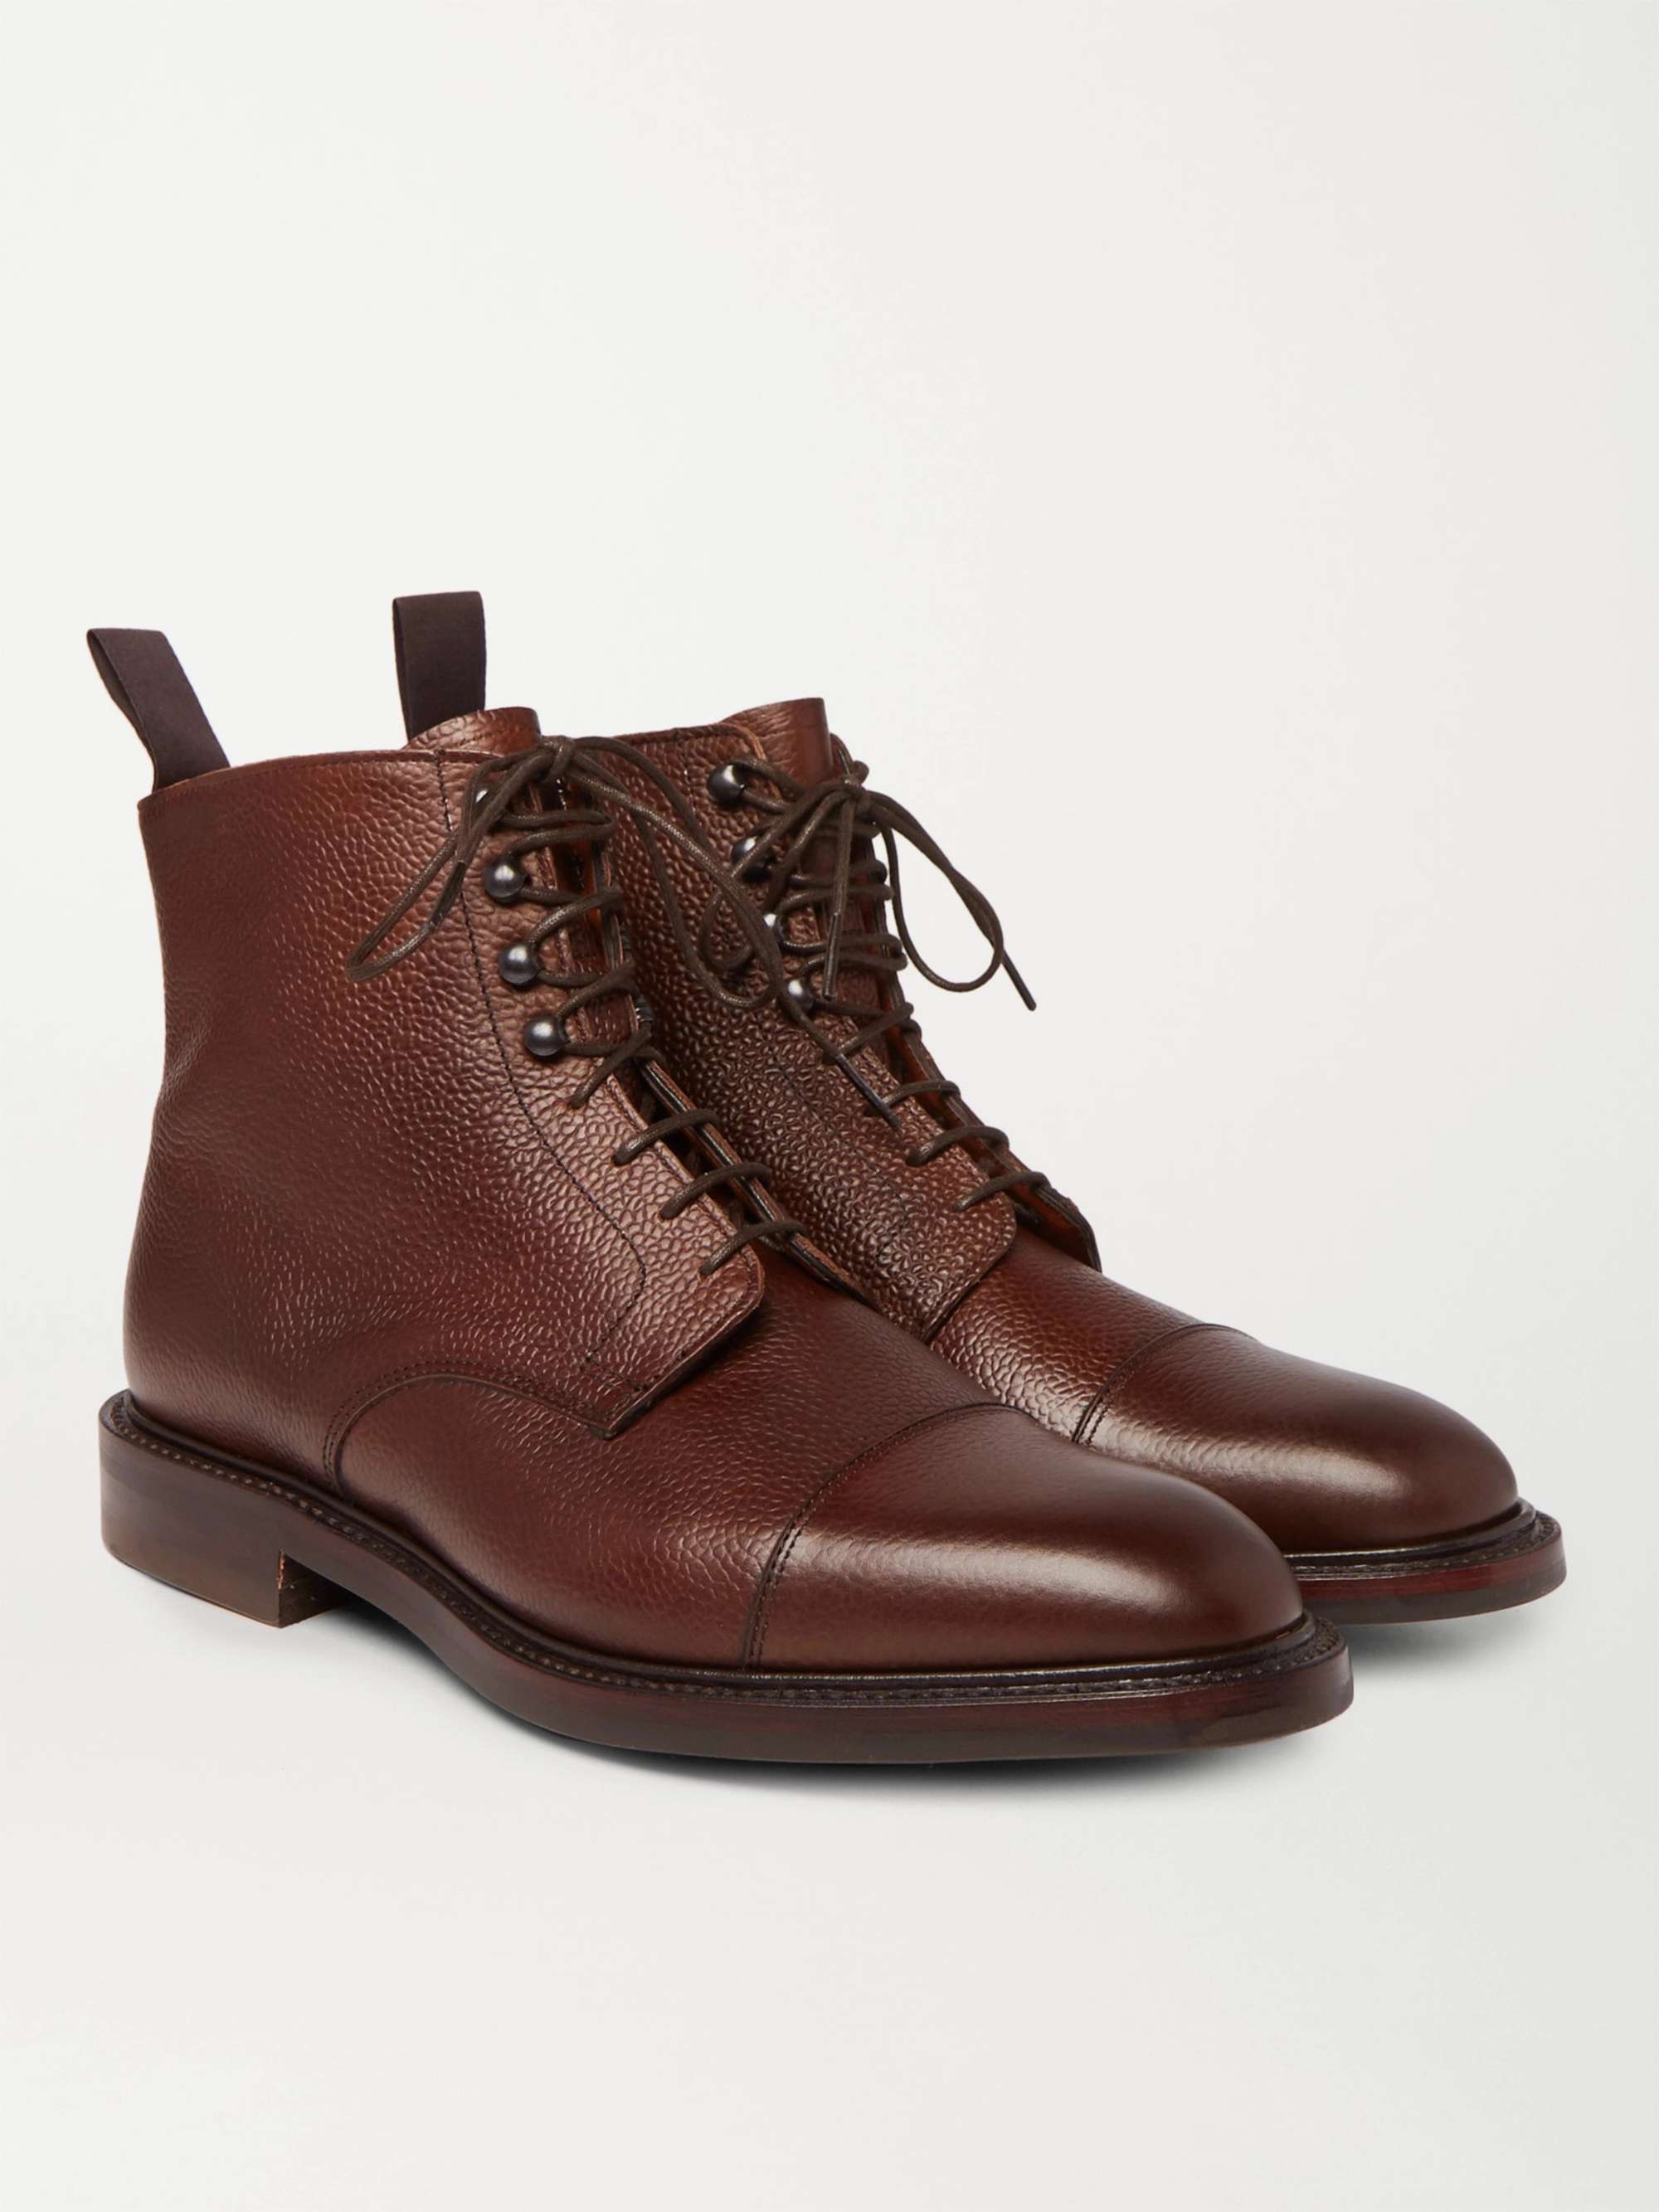 KINGSMAN + George Cleverley Cap-Toe Pebble-Grain Leather Boots for Men | MR  PORTER